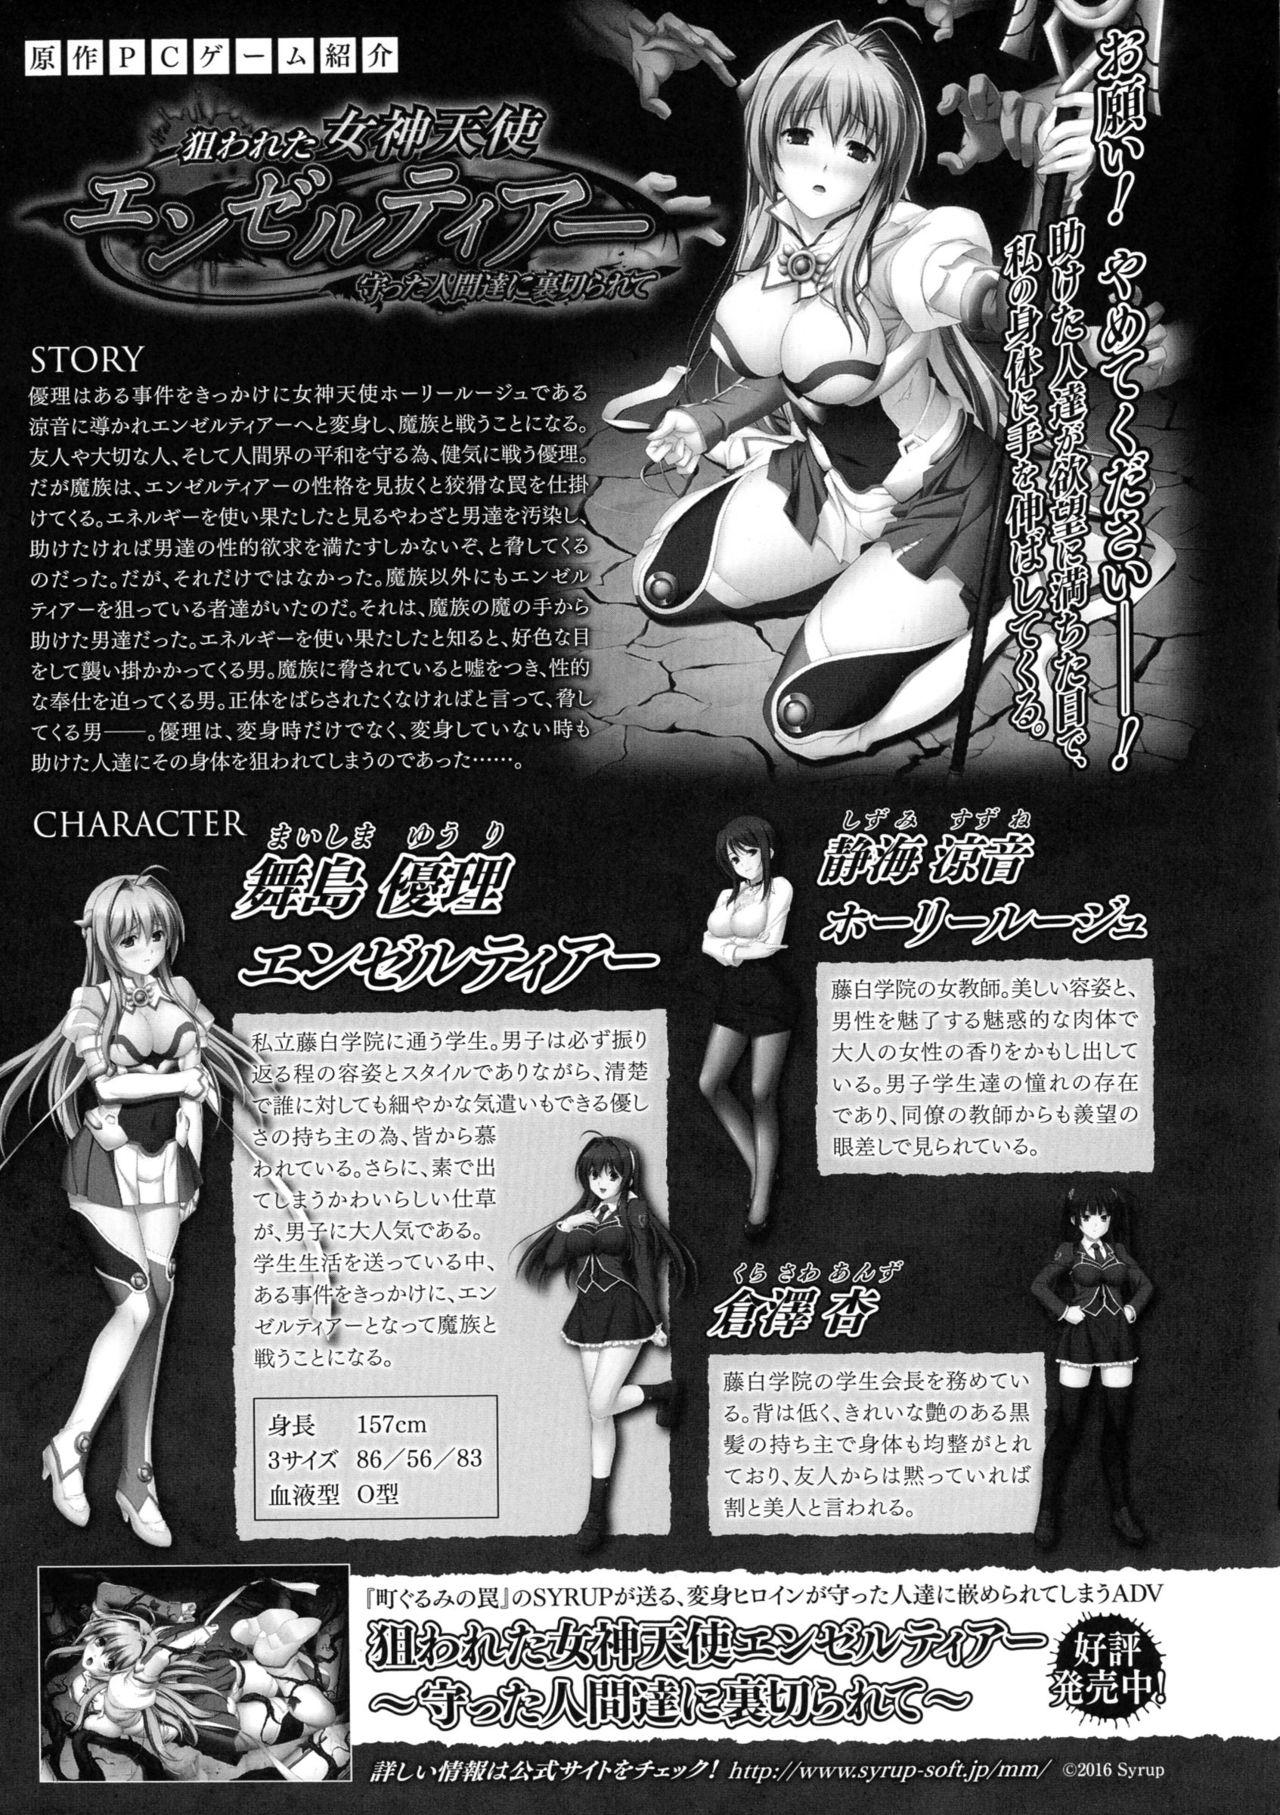 Seigi no Heroine Kangoku File DX Vol. 3 28